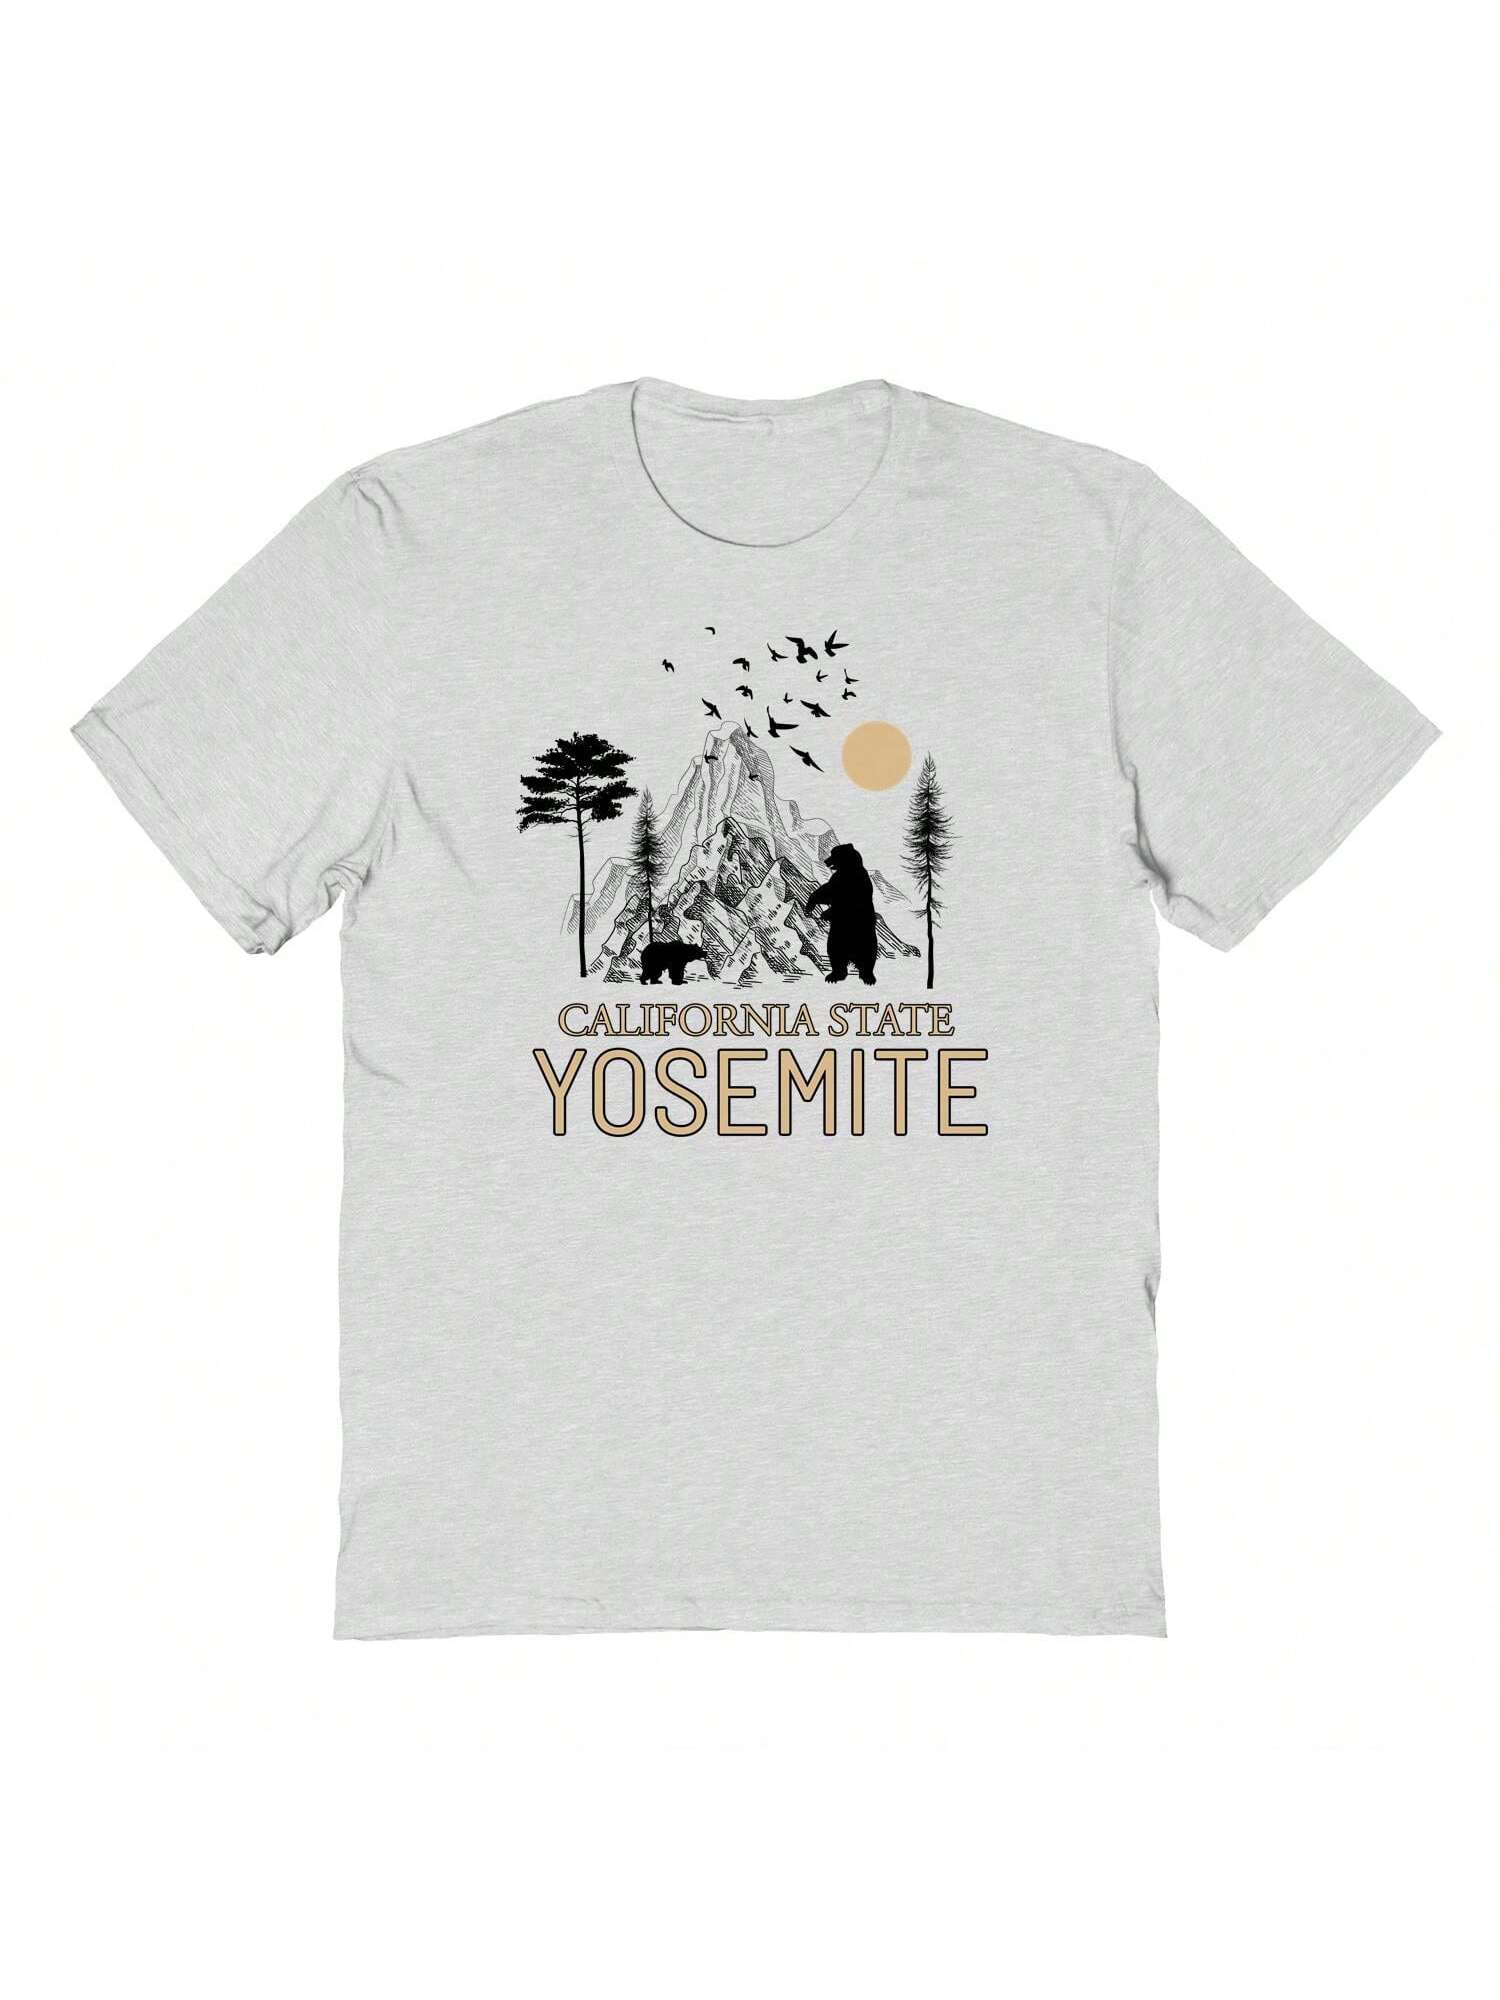 Мужская хлопковая футболка с короткими рукавами Country Parks California State Yose Mite Graphic Sand, светло-серый мужская хлопковая футболка с короткими рукавами country parks california state yose mite graphic sand бежевый